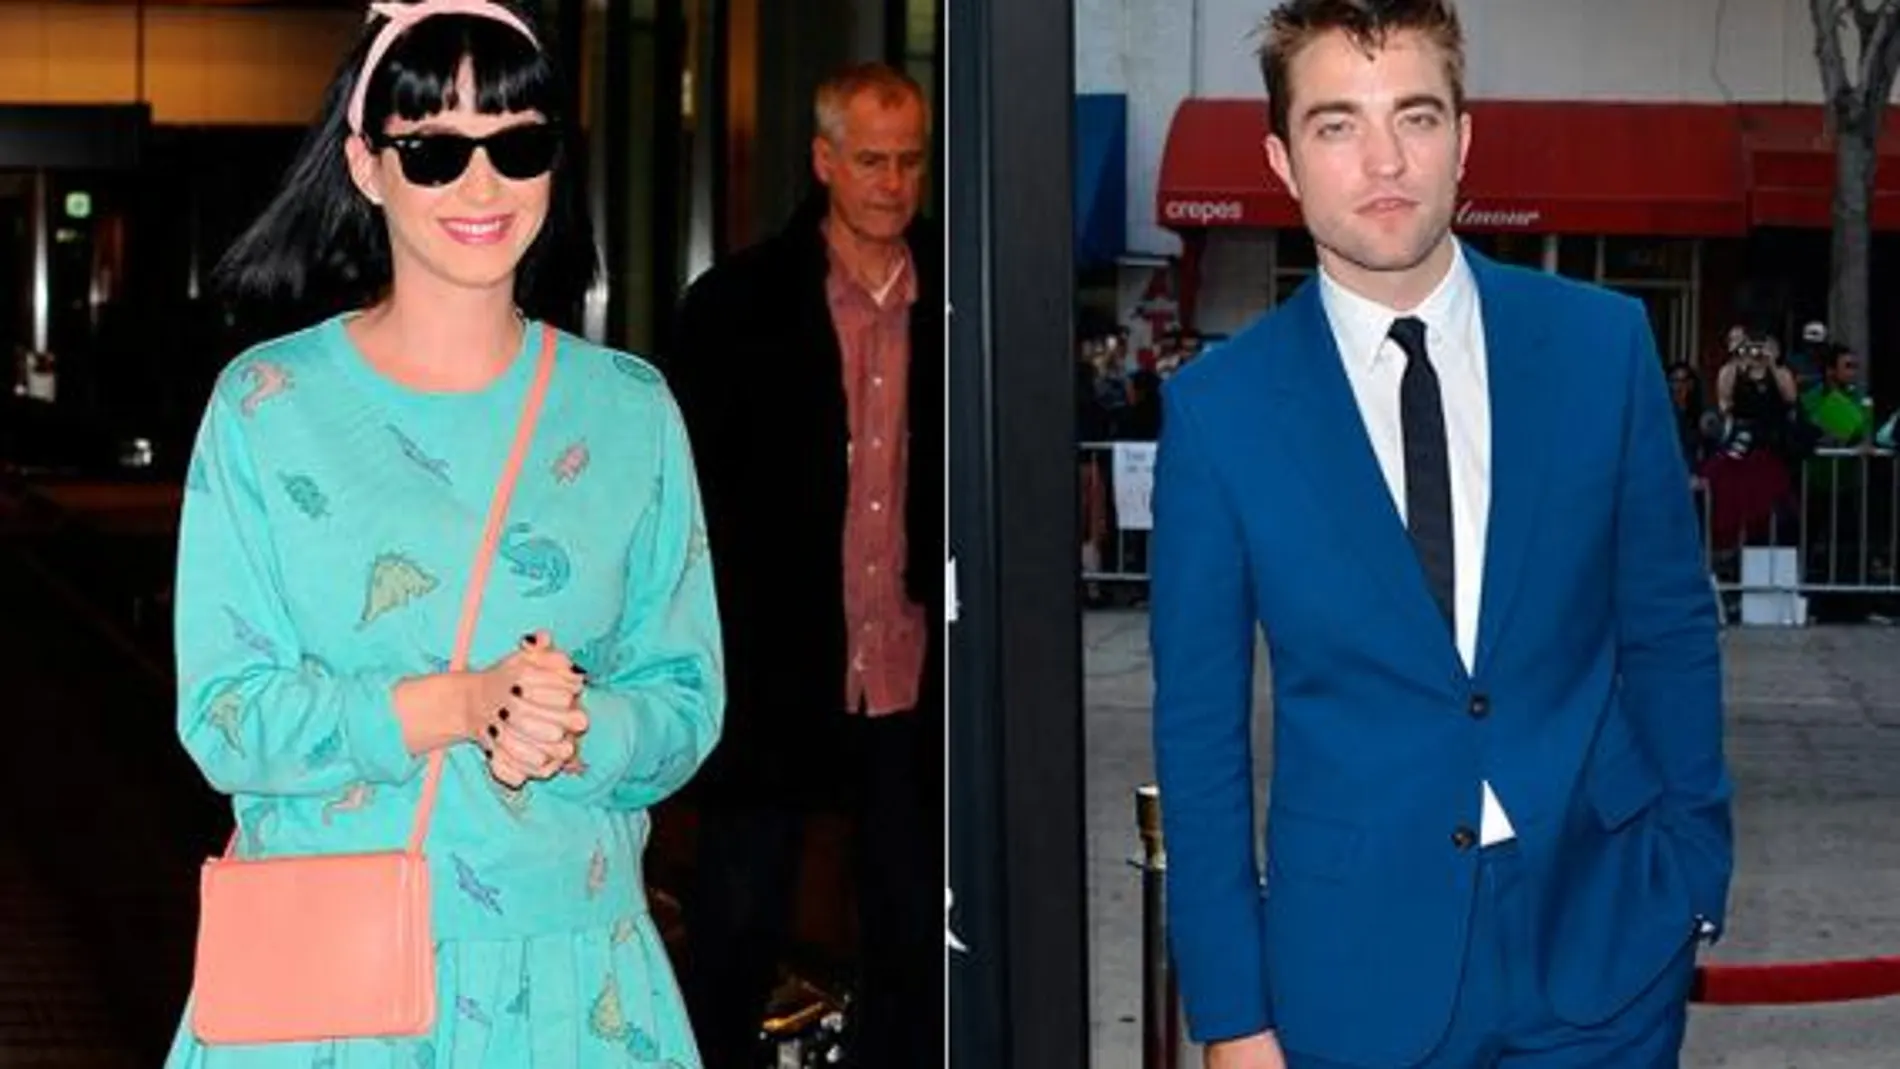 Robert Pattinson tontea con Katy Perry